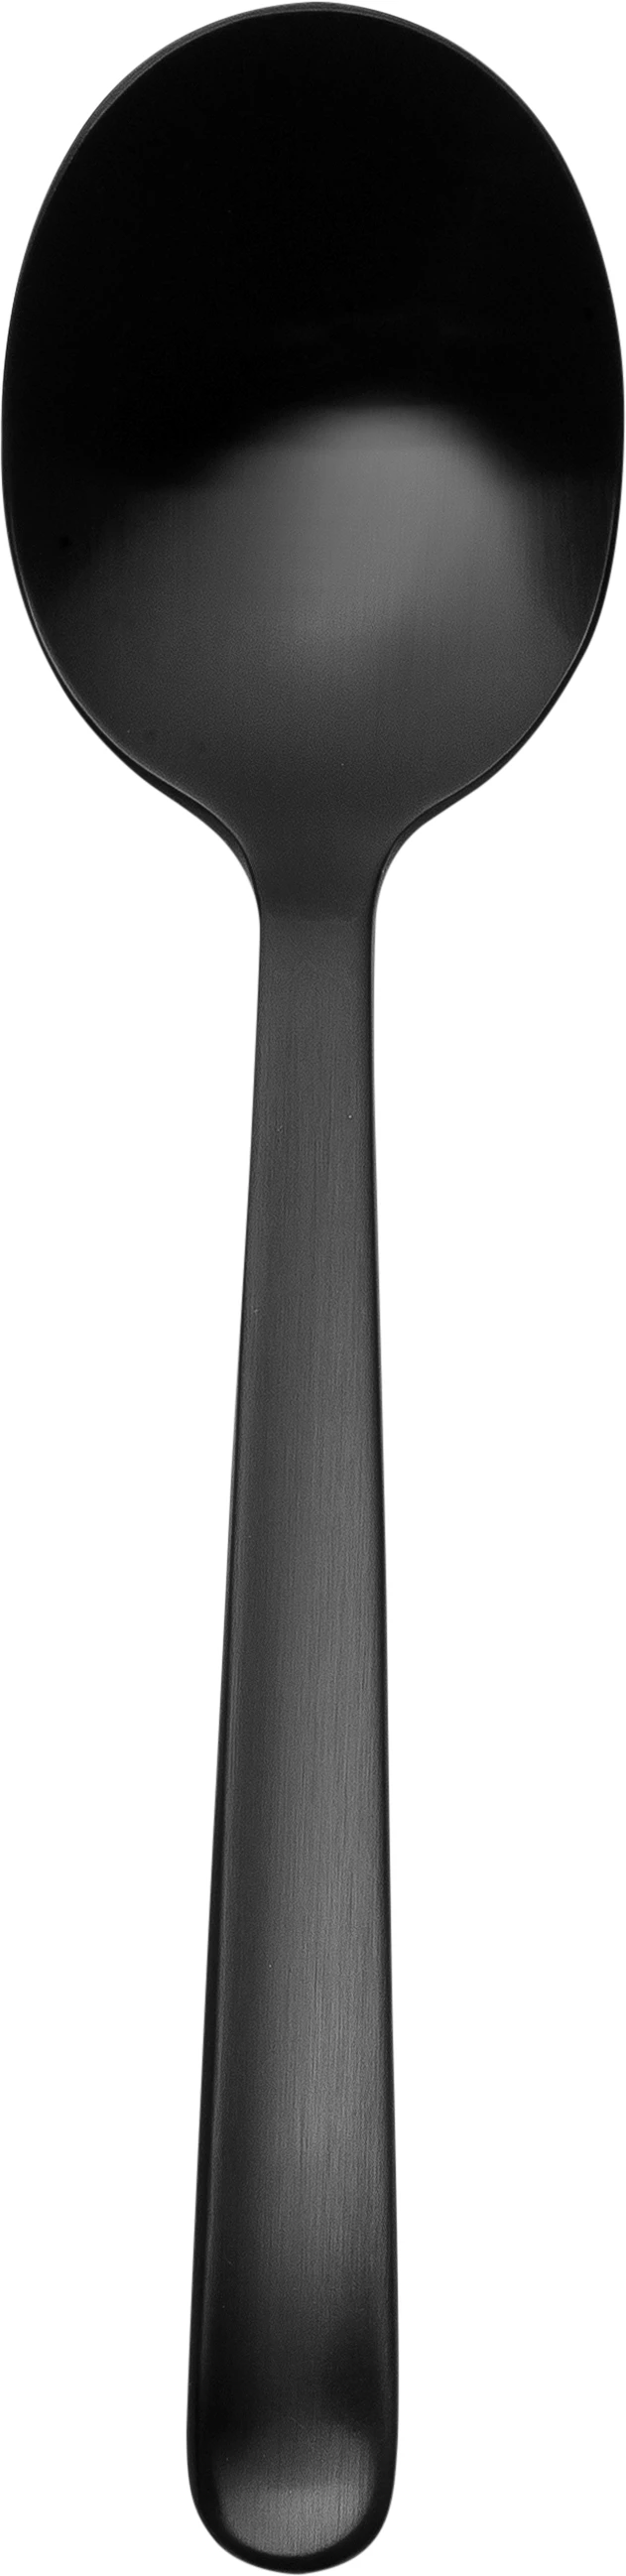 Harlang spiseske, sort, 17,5 cm